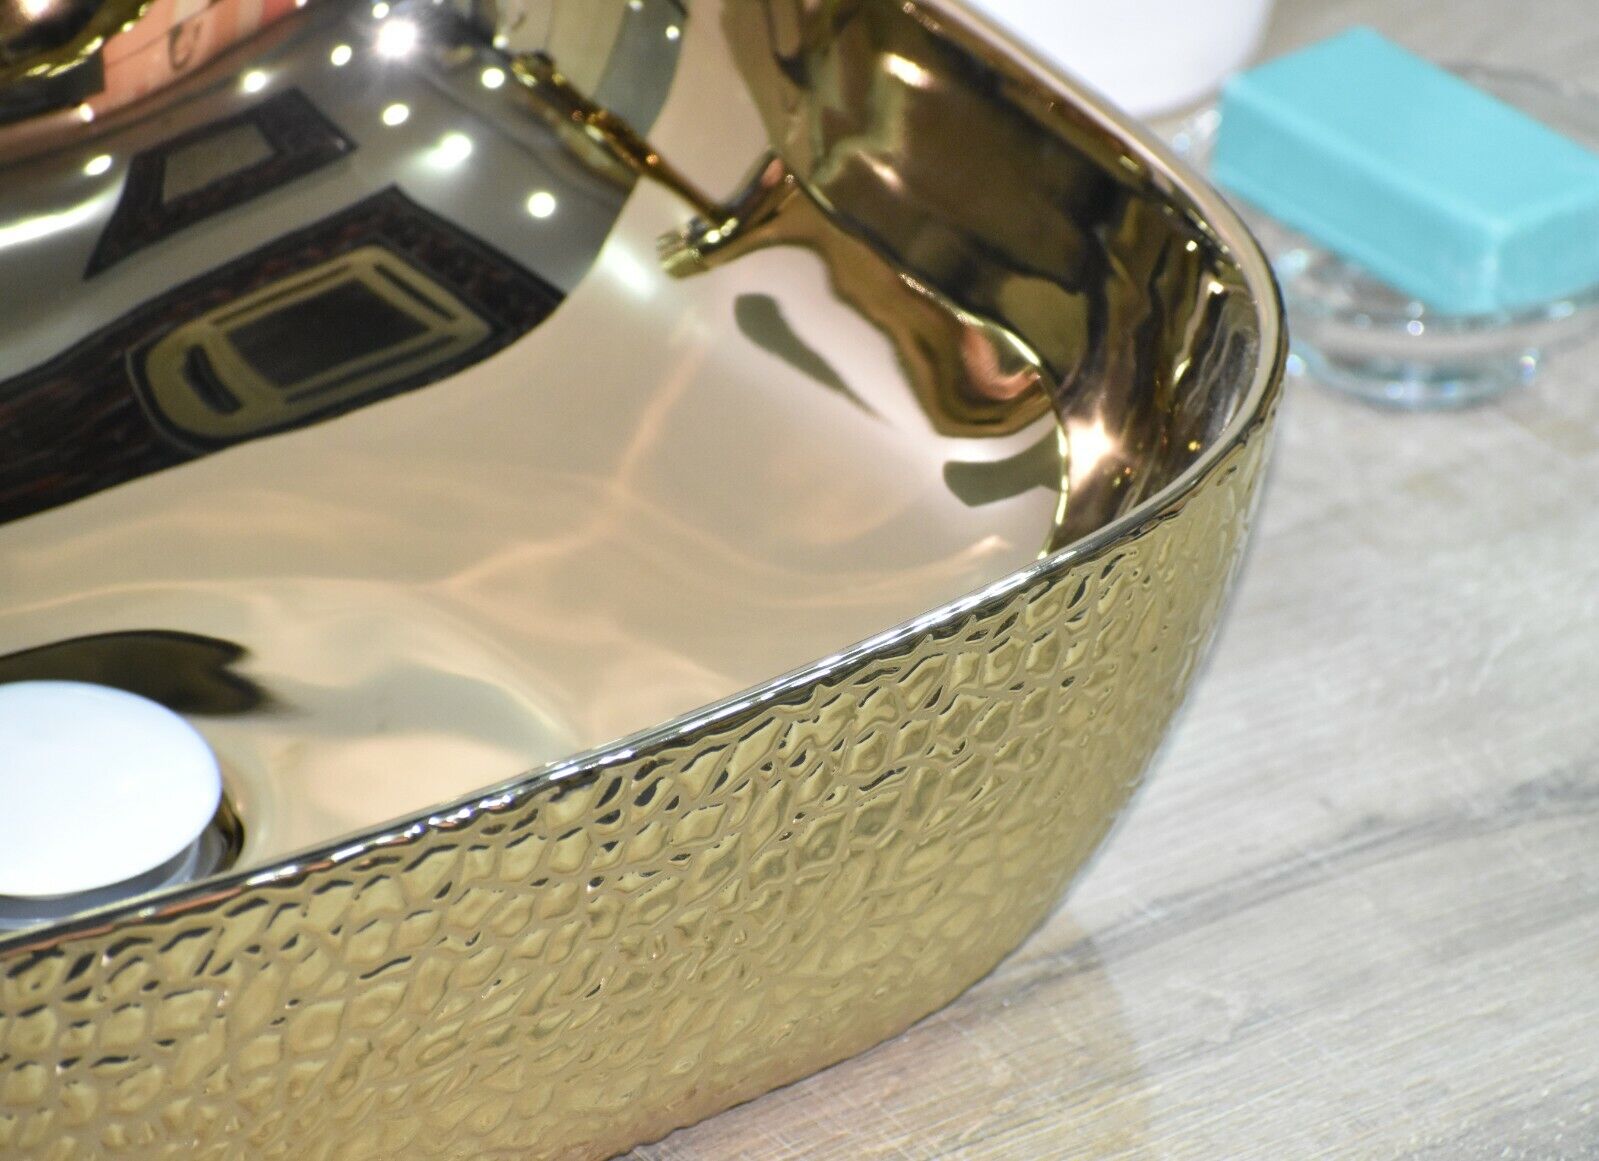 InArt Rectangle Bathroom Ceramic Vessel Sink Art Basin Gold 46 x 33 CM - InArt-Studio-USA